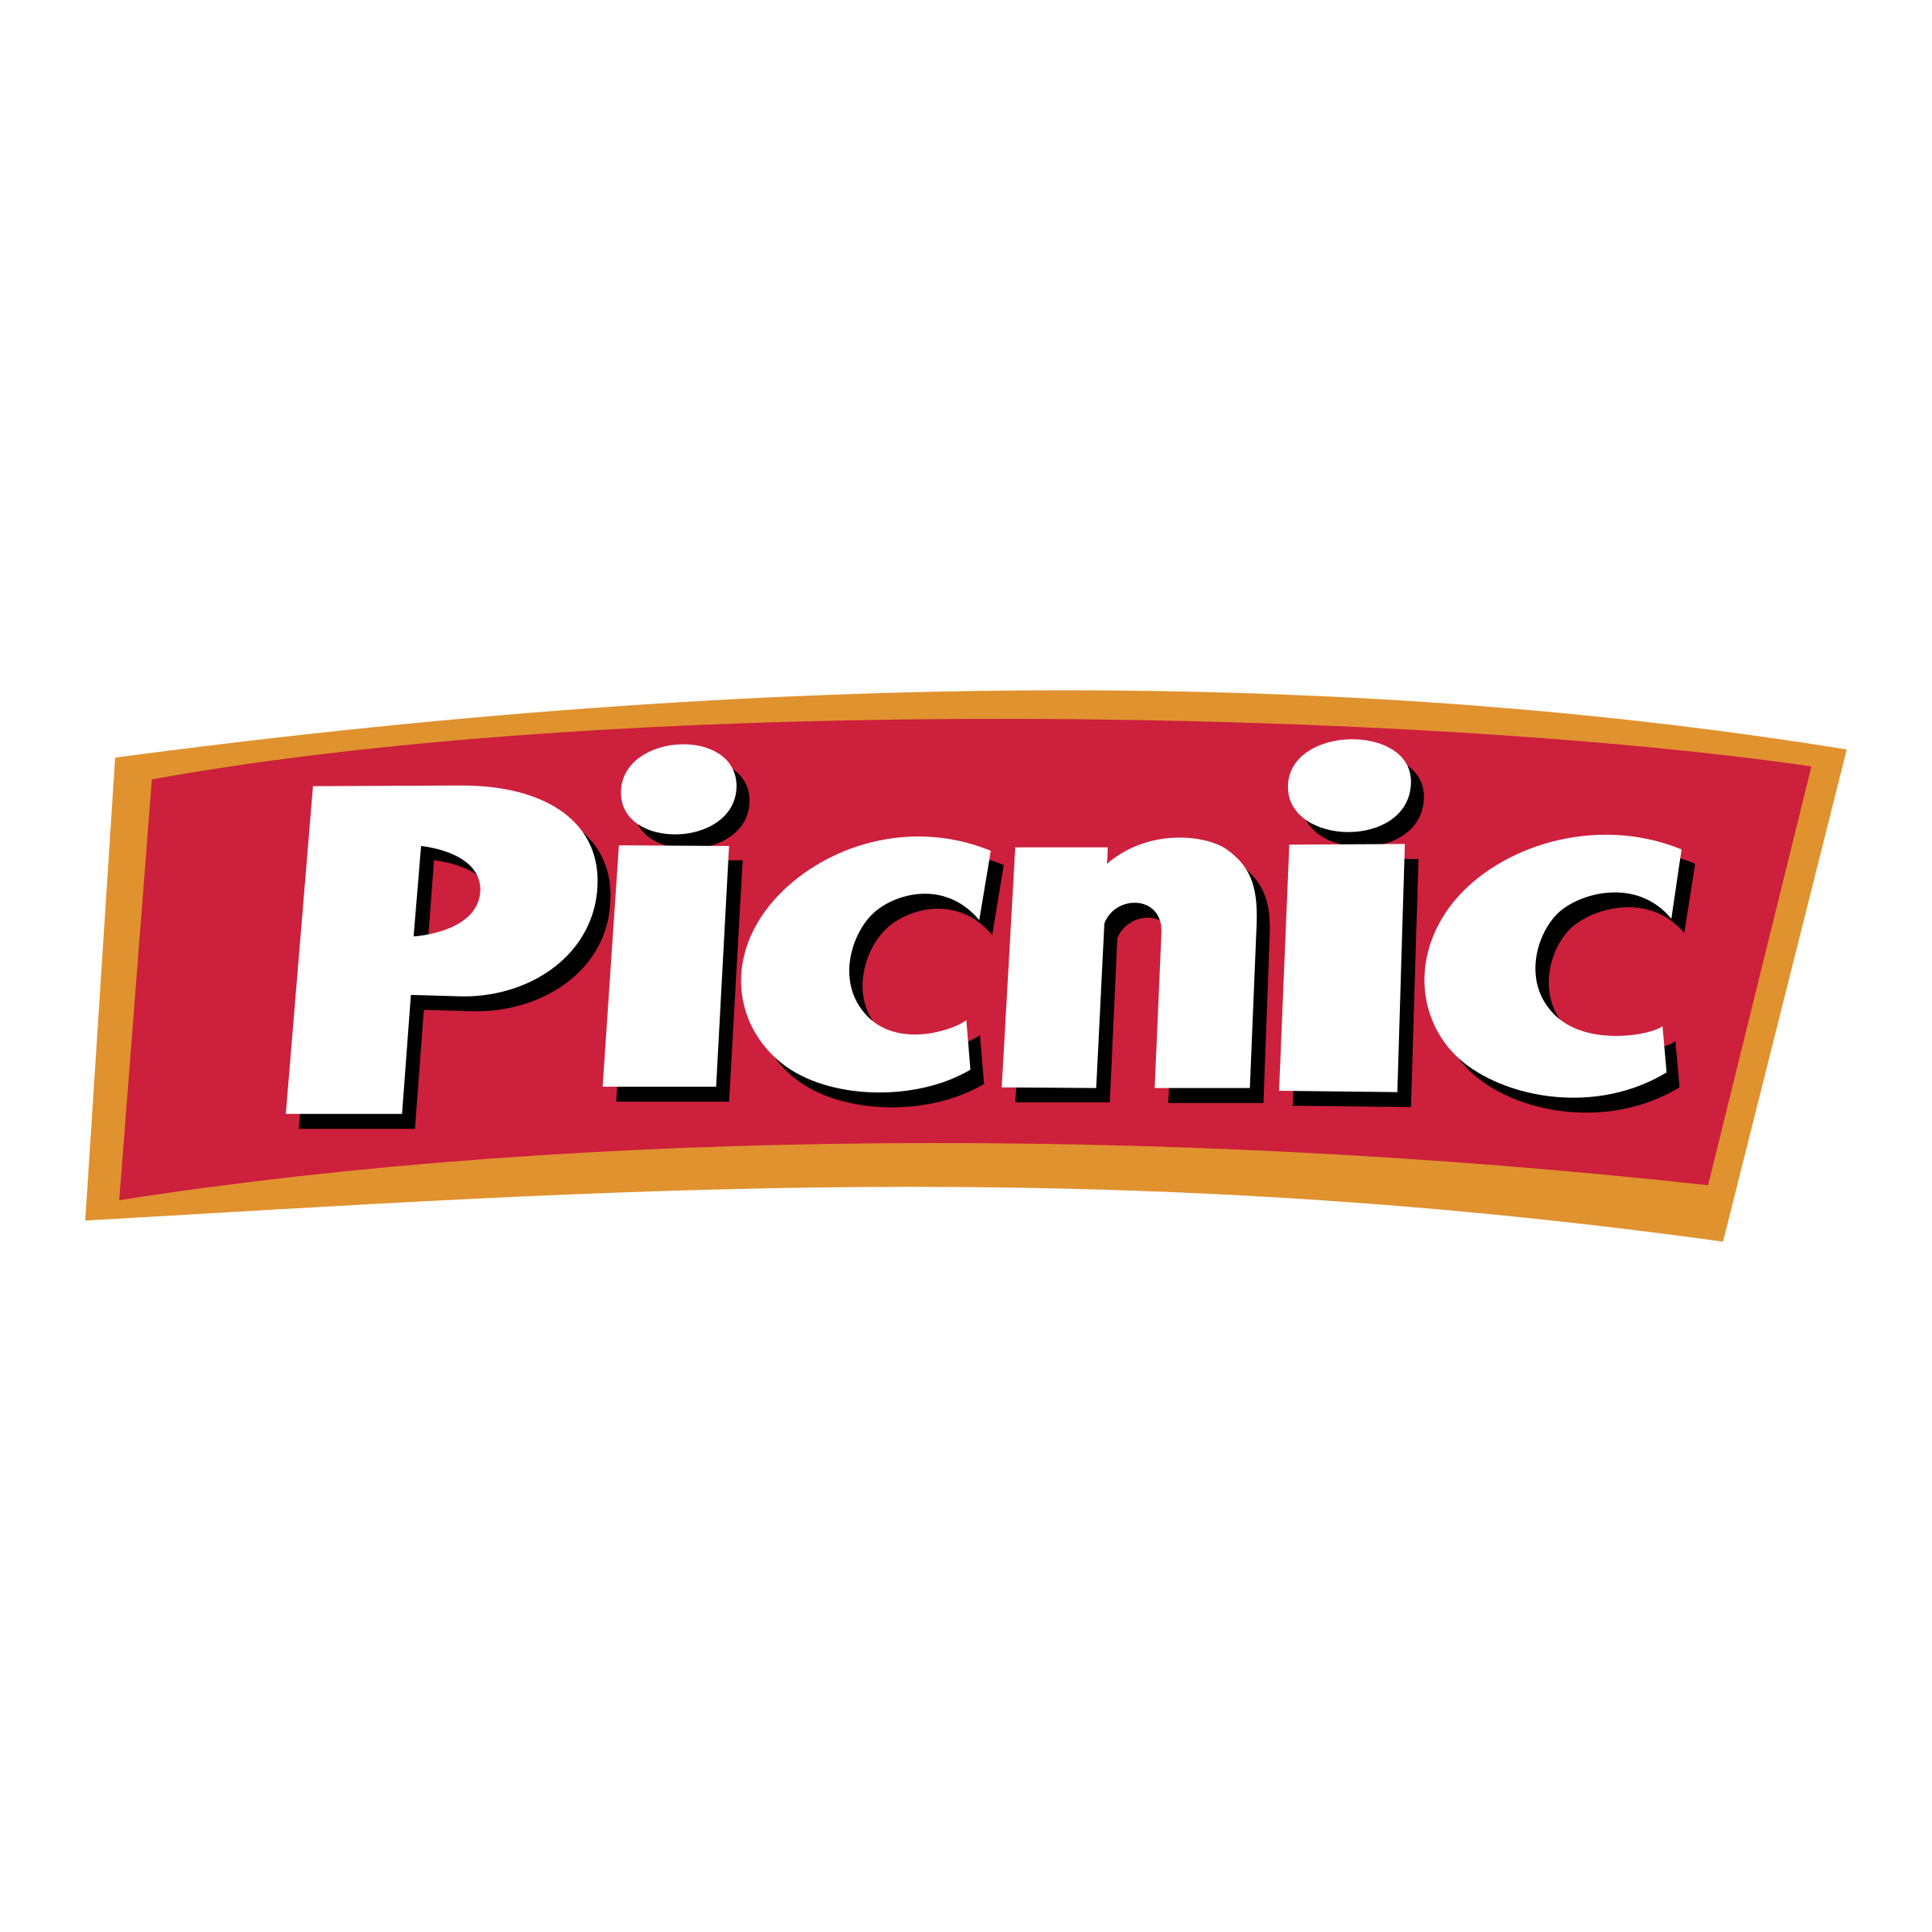 Picnic Logo - Picnic Logo PNG Transparent & SVG Vector - Freebie Supply